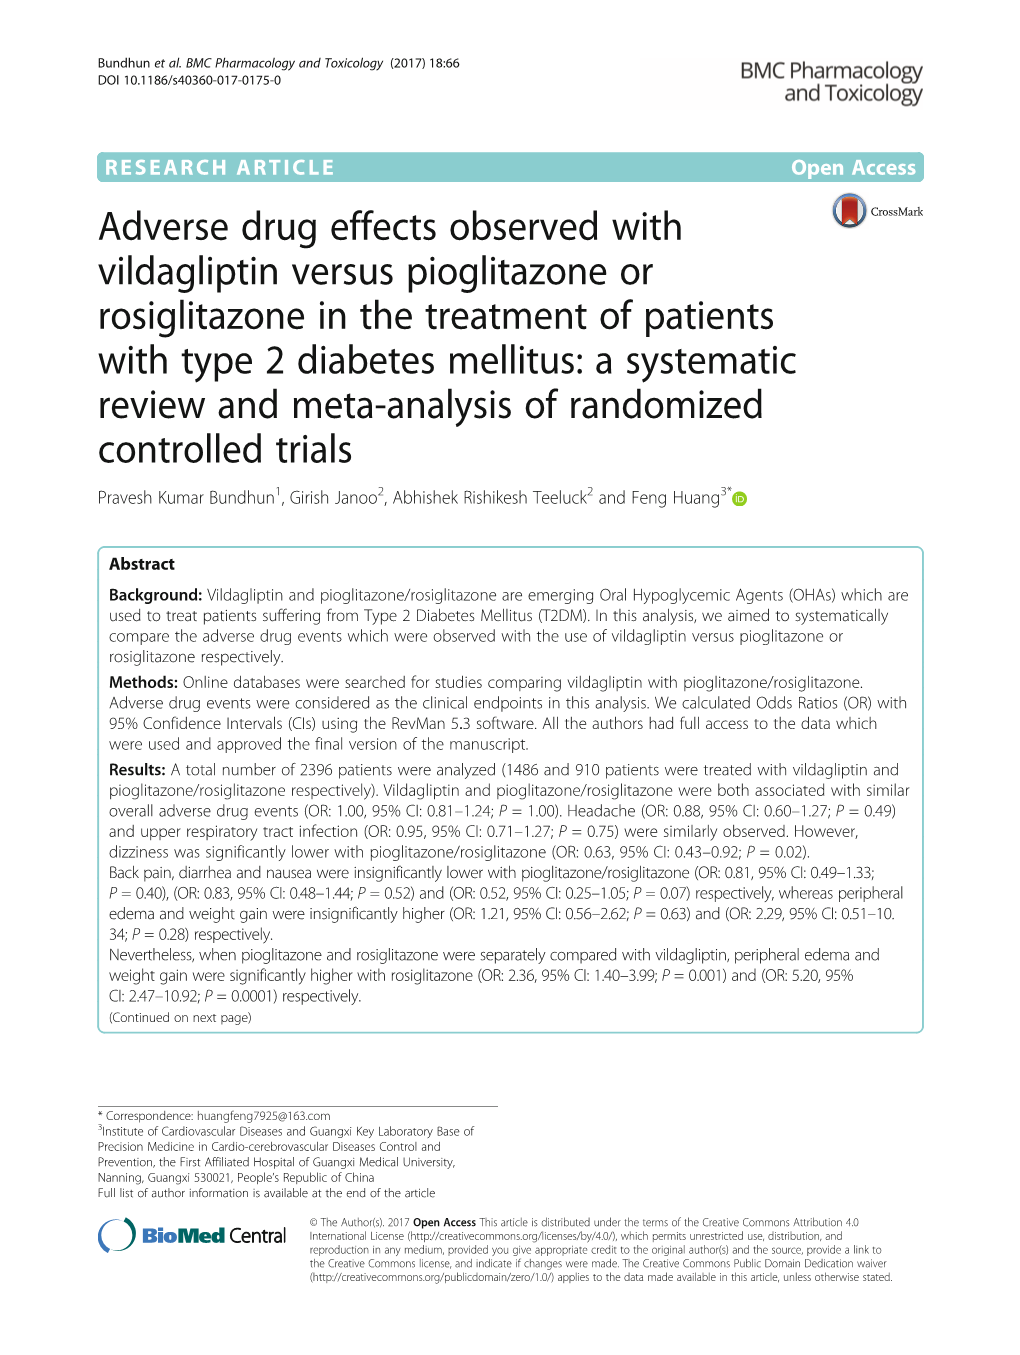 Adverse Drug Effects Observed with Vildagliptin Versus Pioglitazone Or